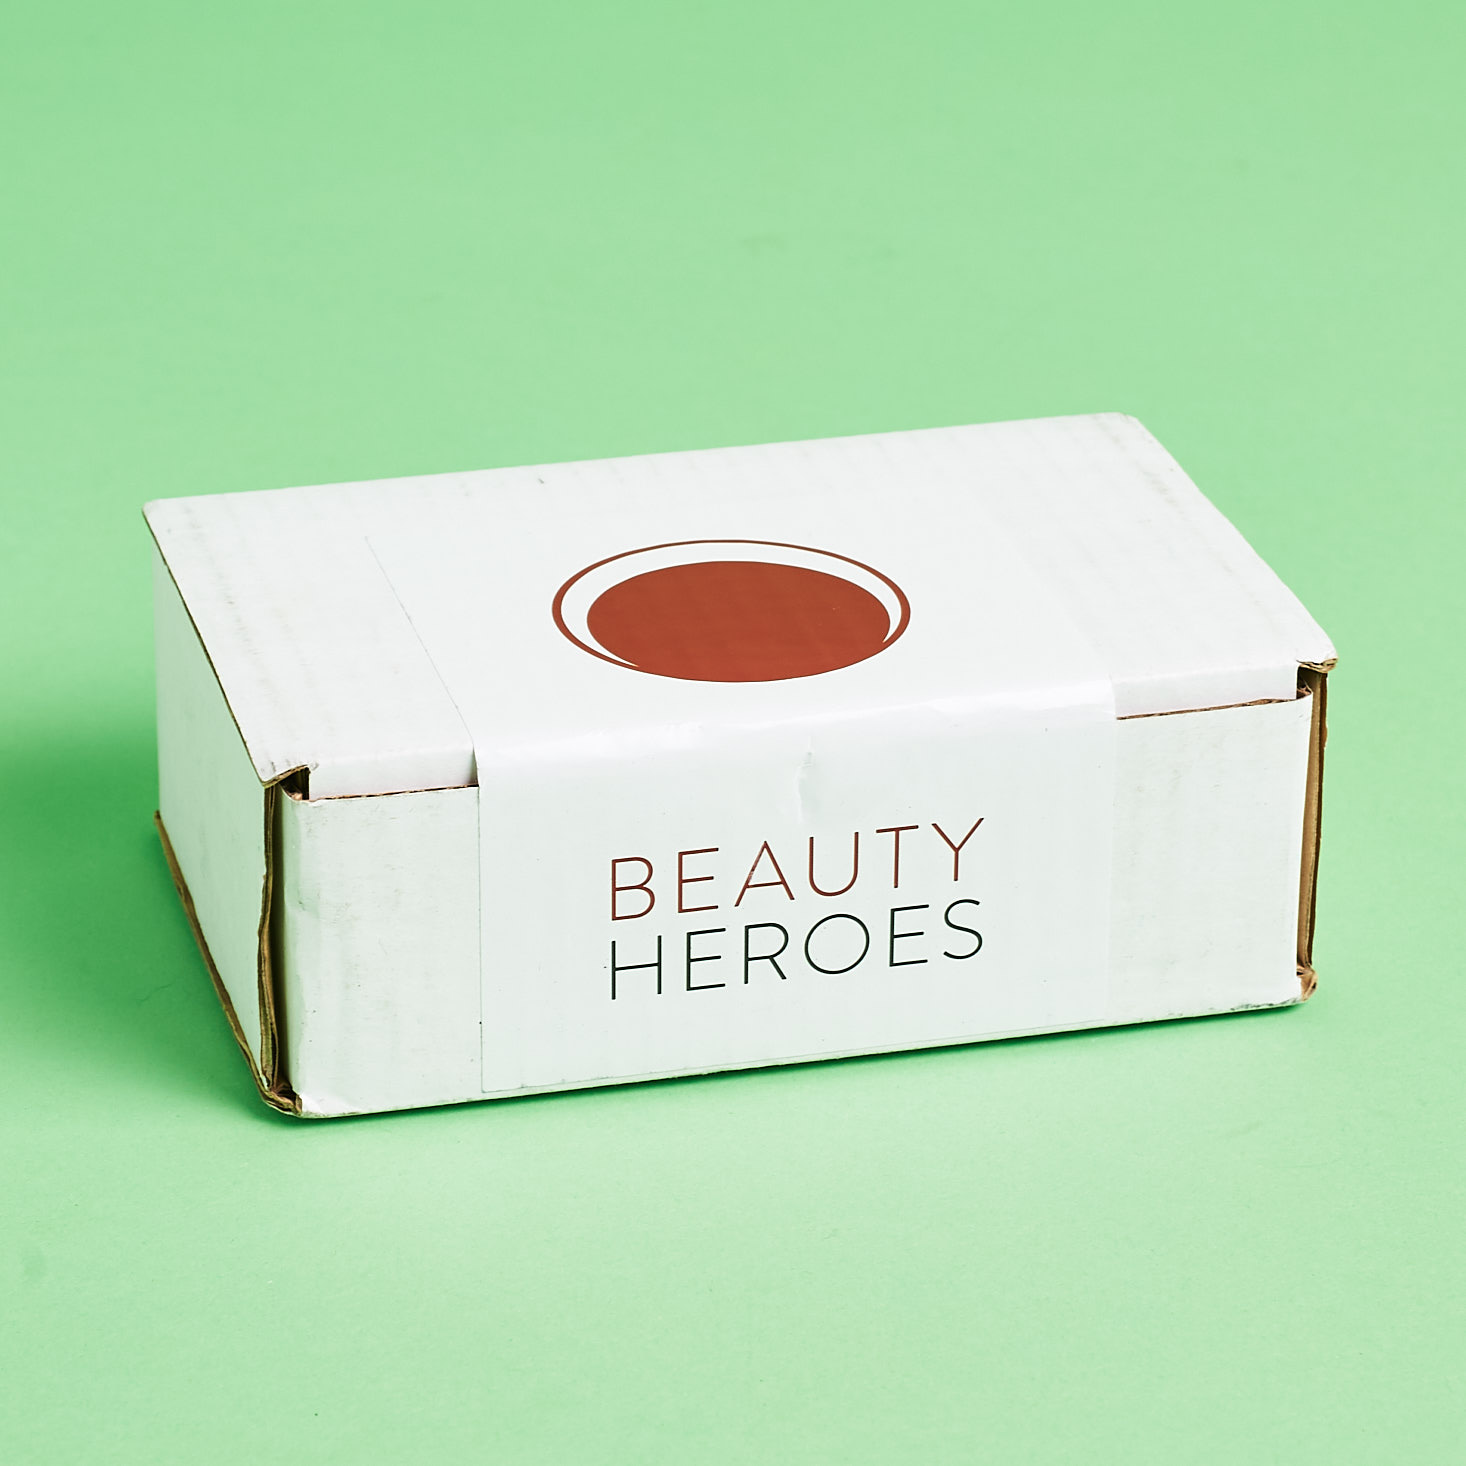 Beauty Heroes Subscription Box Review February 2018 MSA